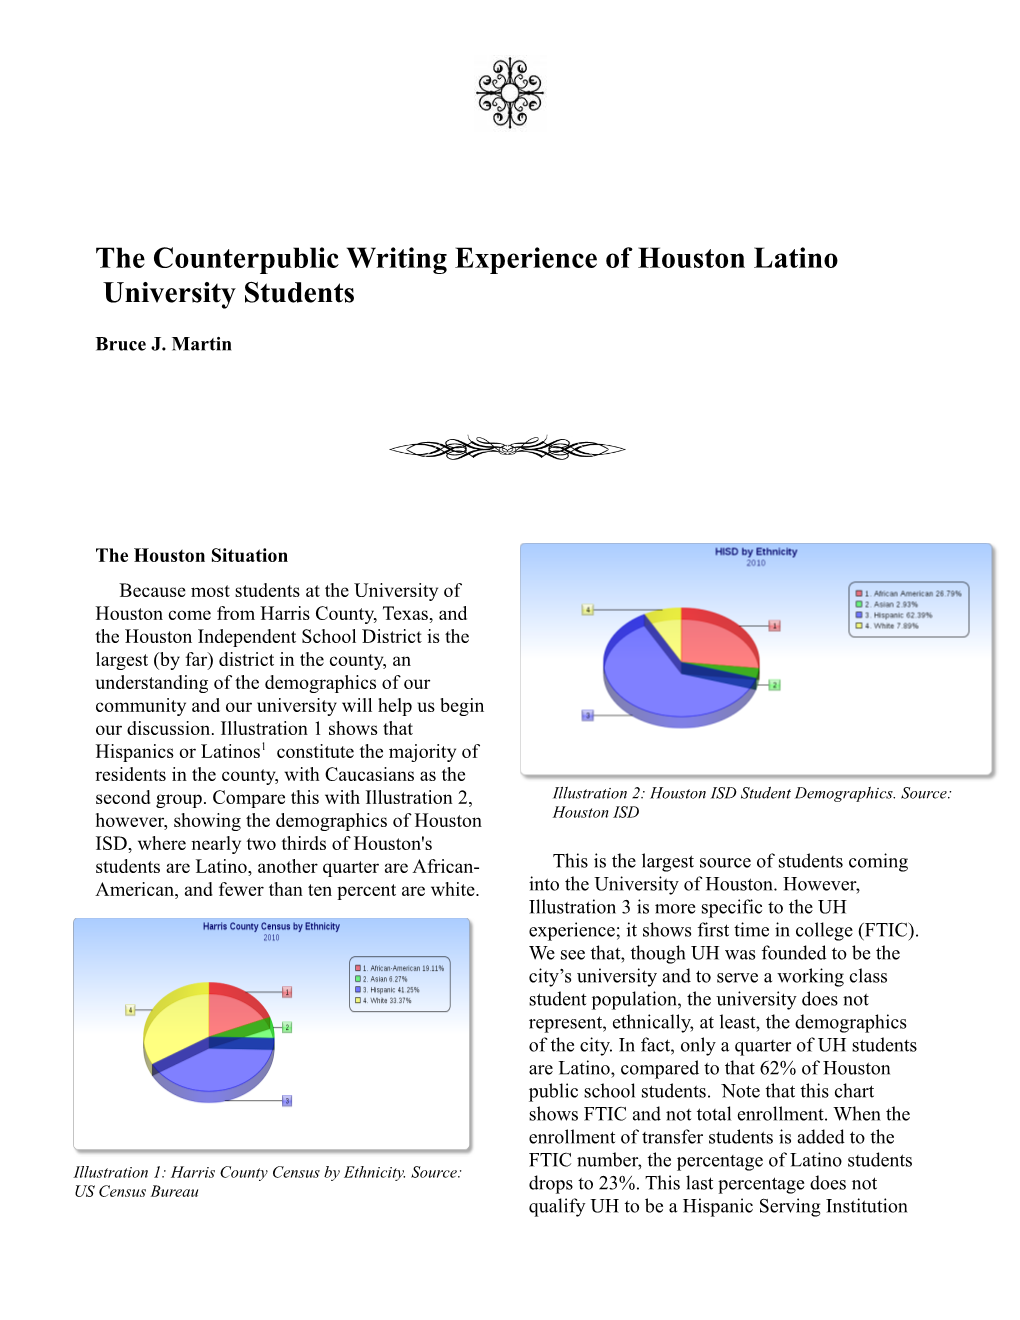 The Counterpublic Writing Experience of Houston Latino University Students